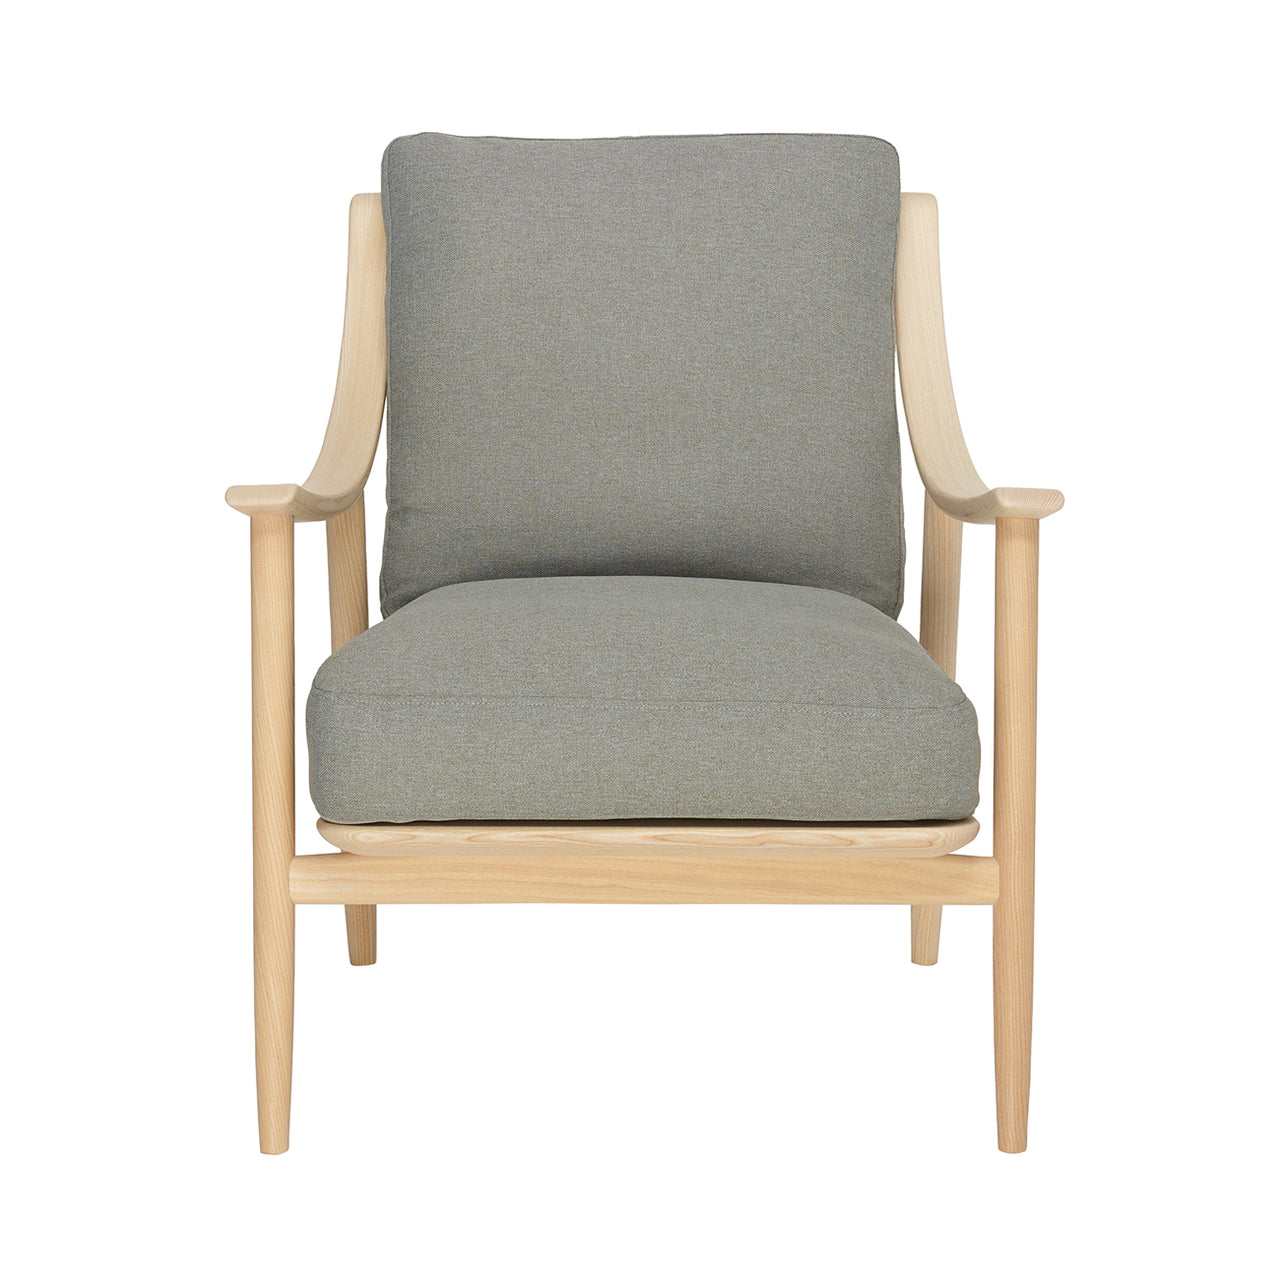 Marino Lounge Chair: Natural Oak